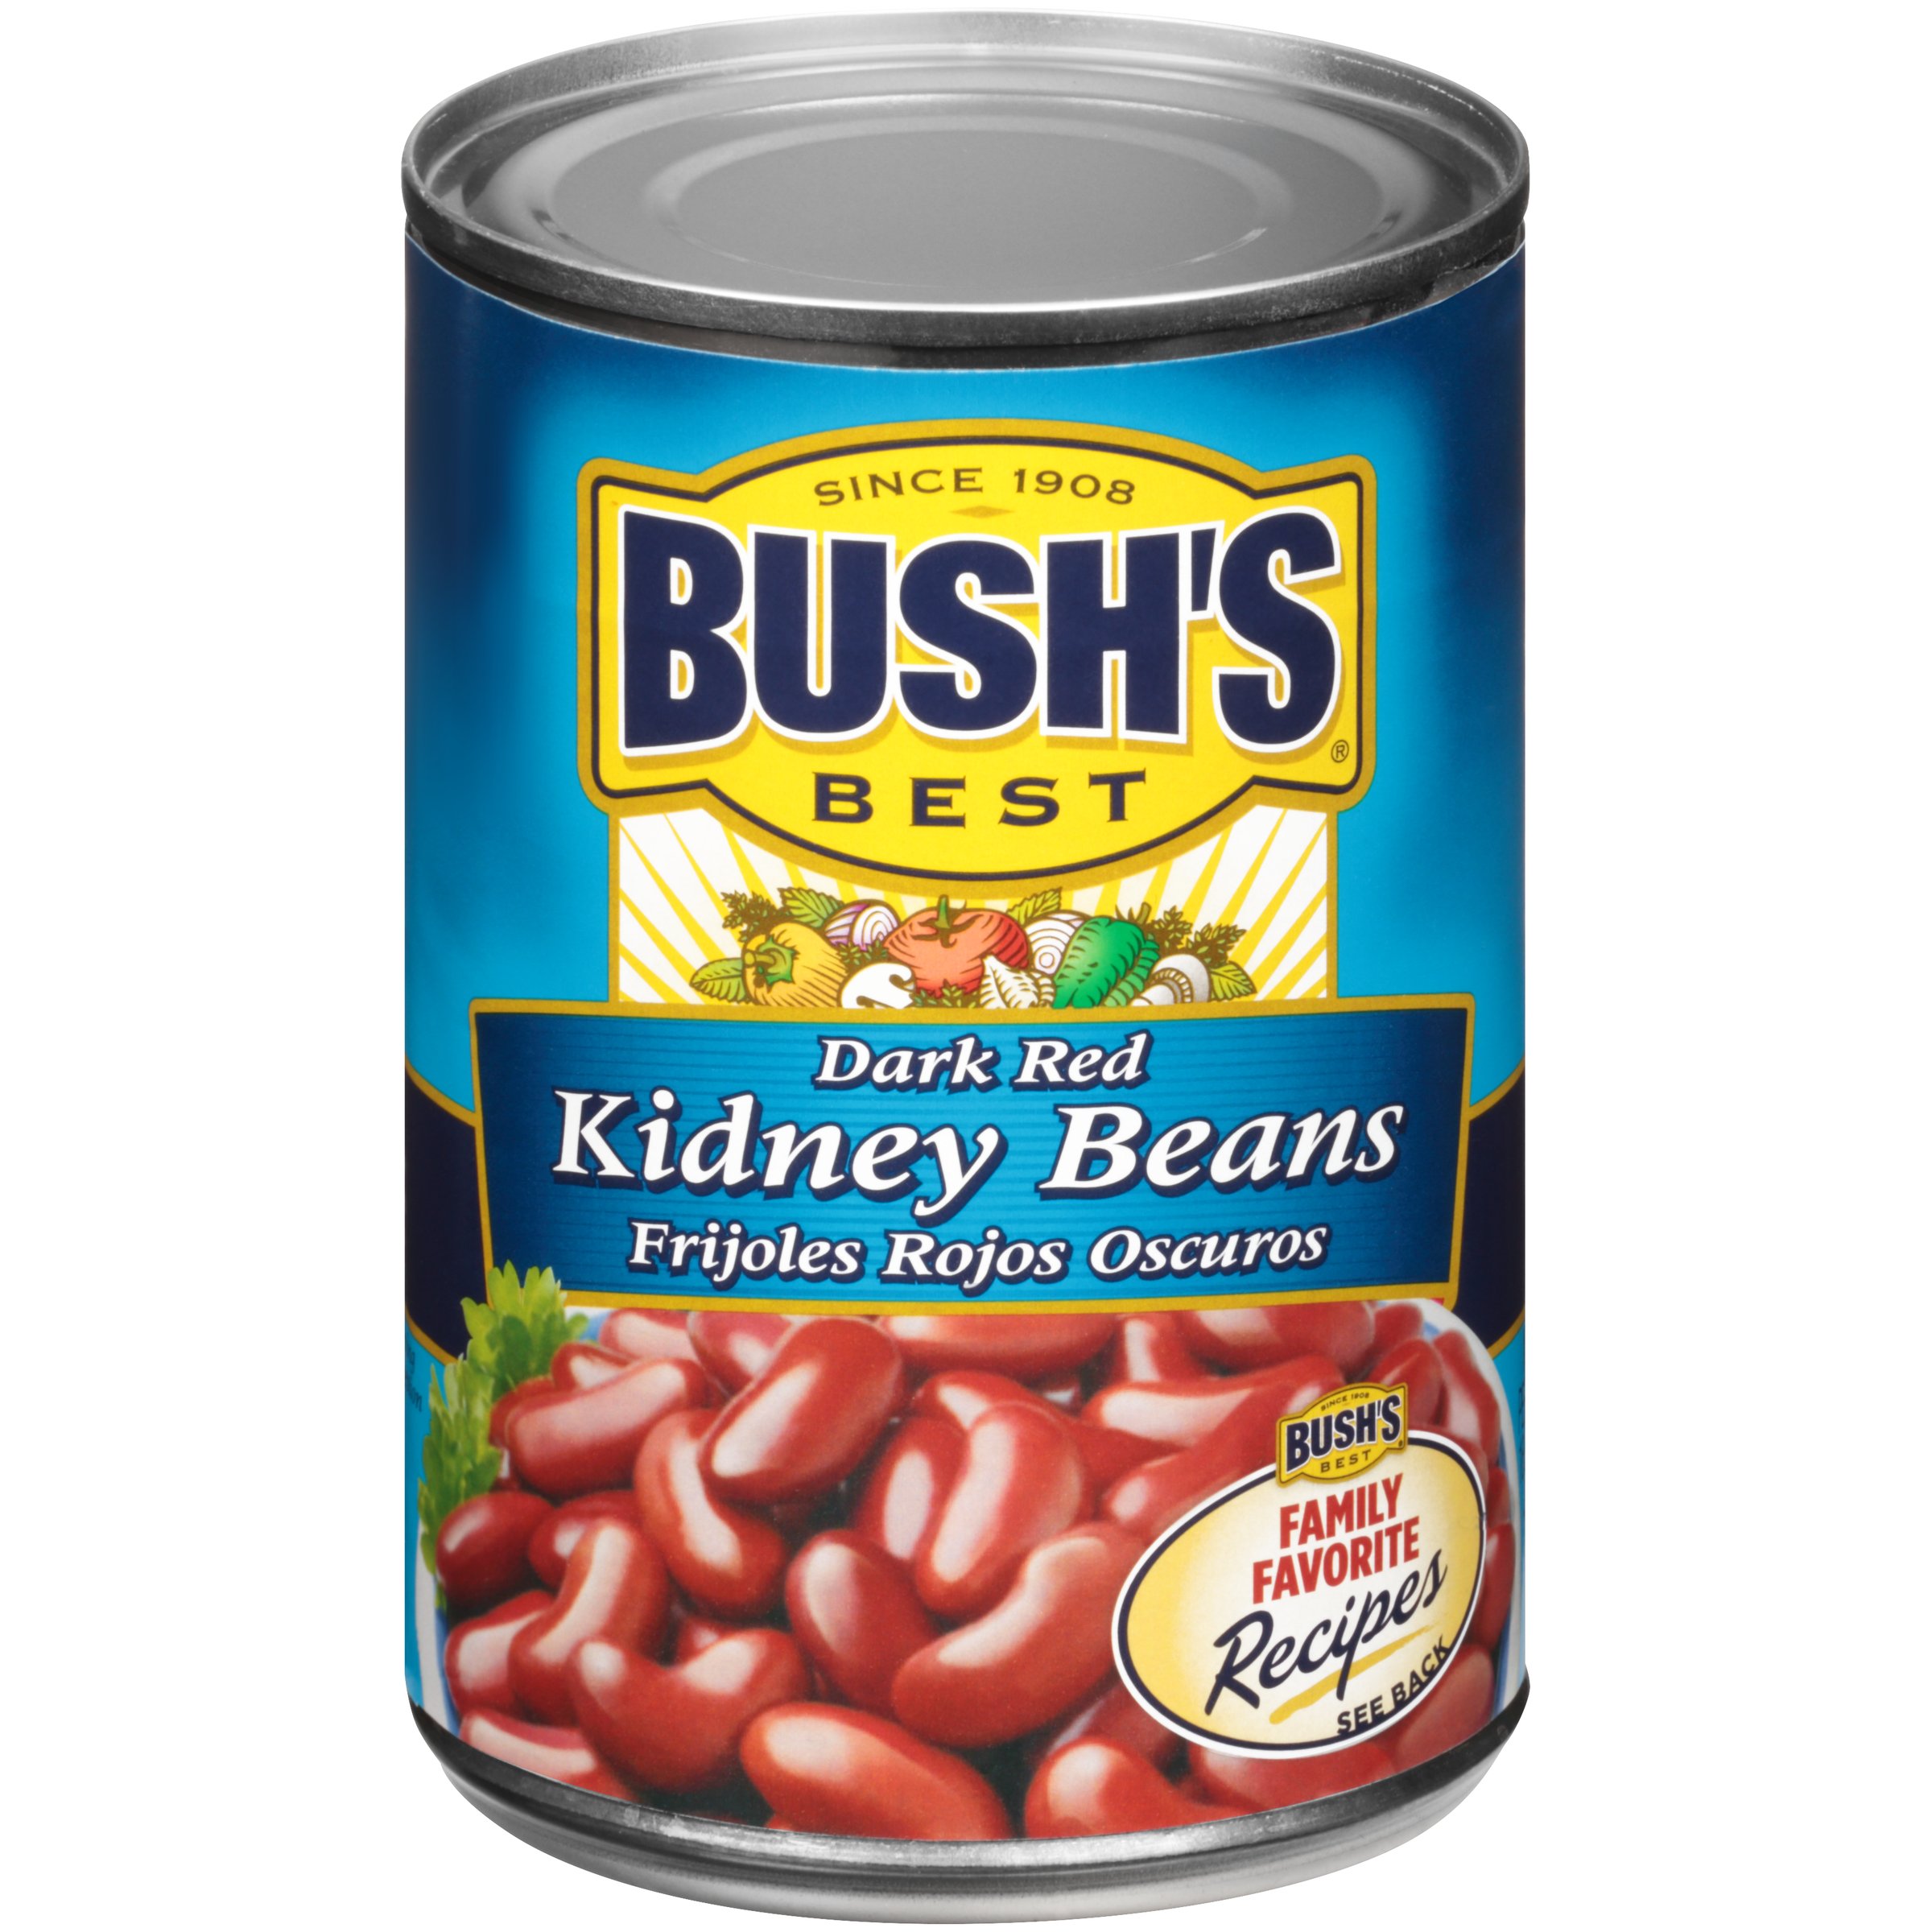 Detail Images Of Kidney Beans Nomer 5